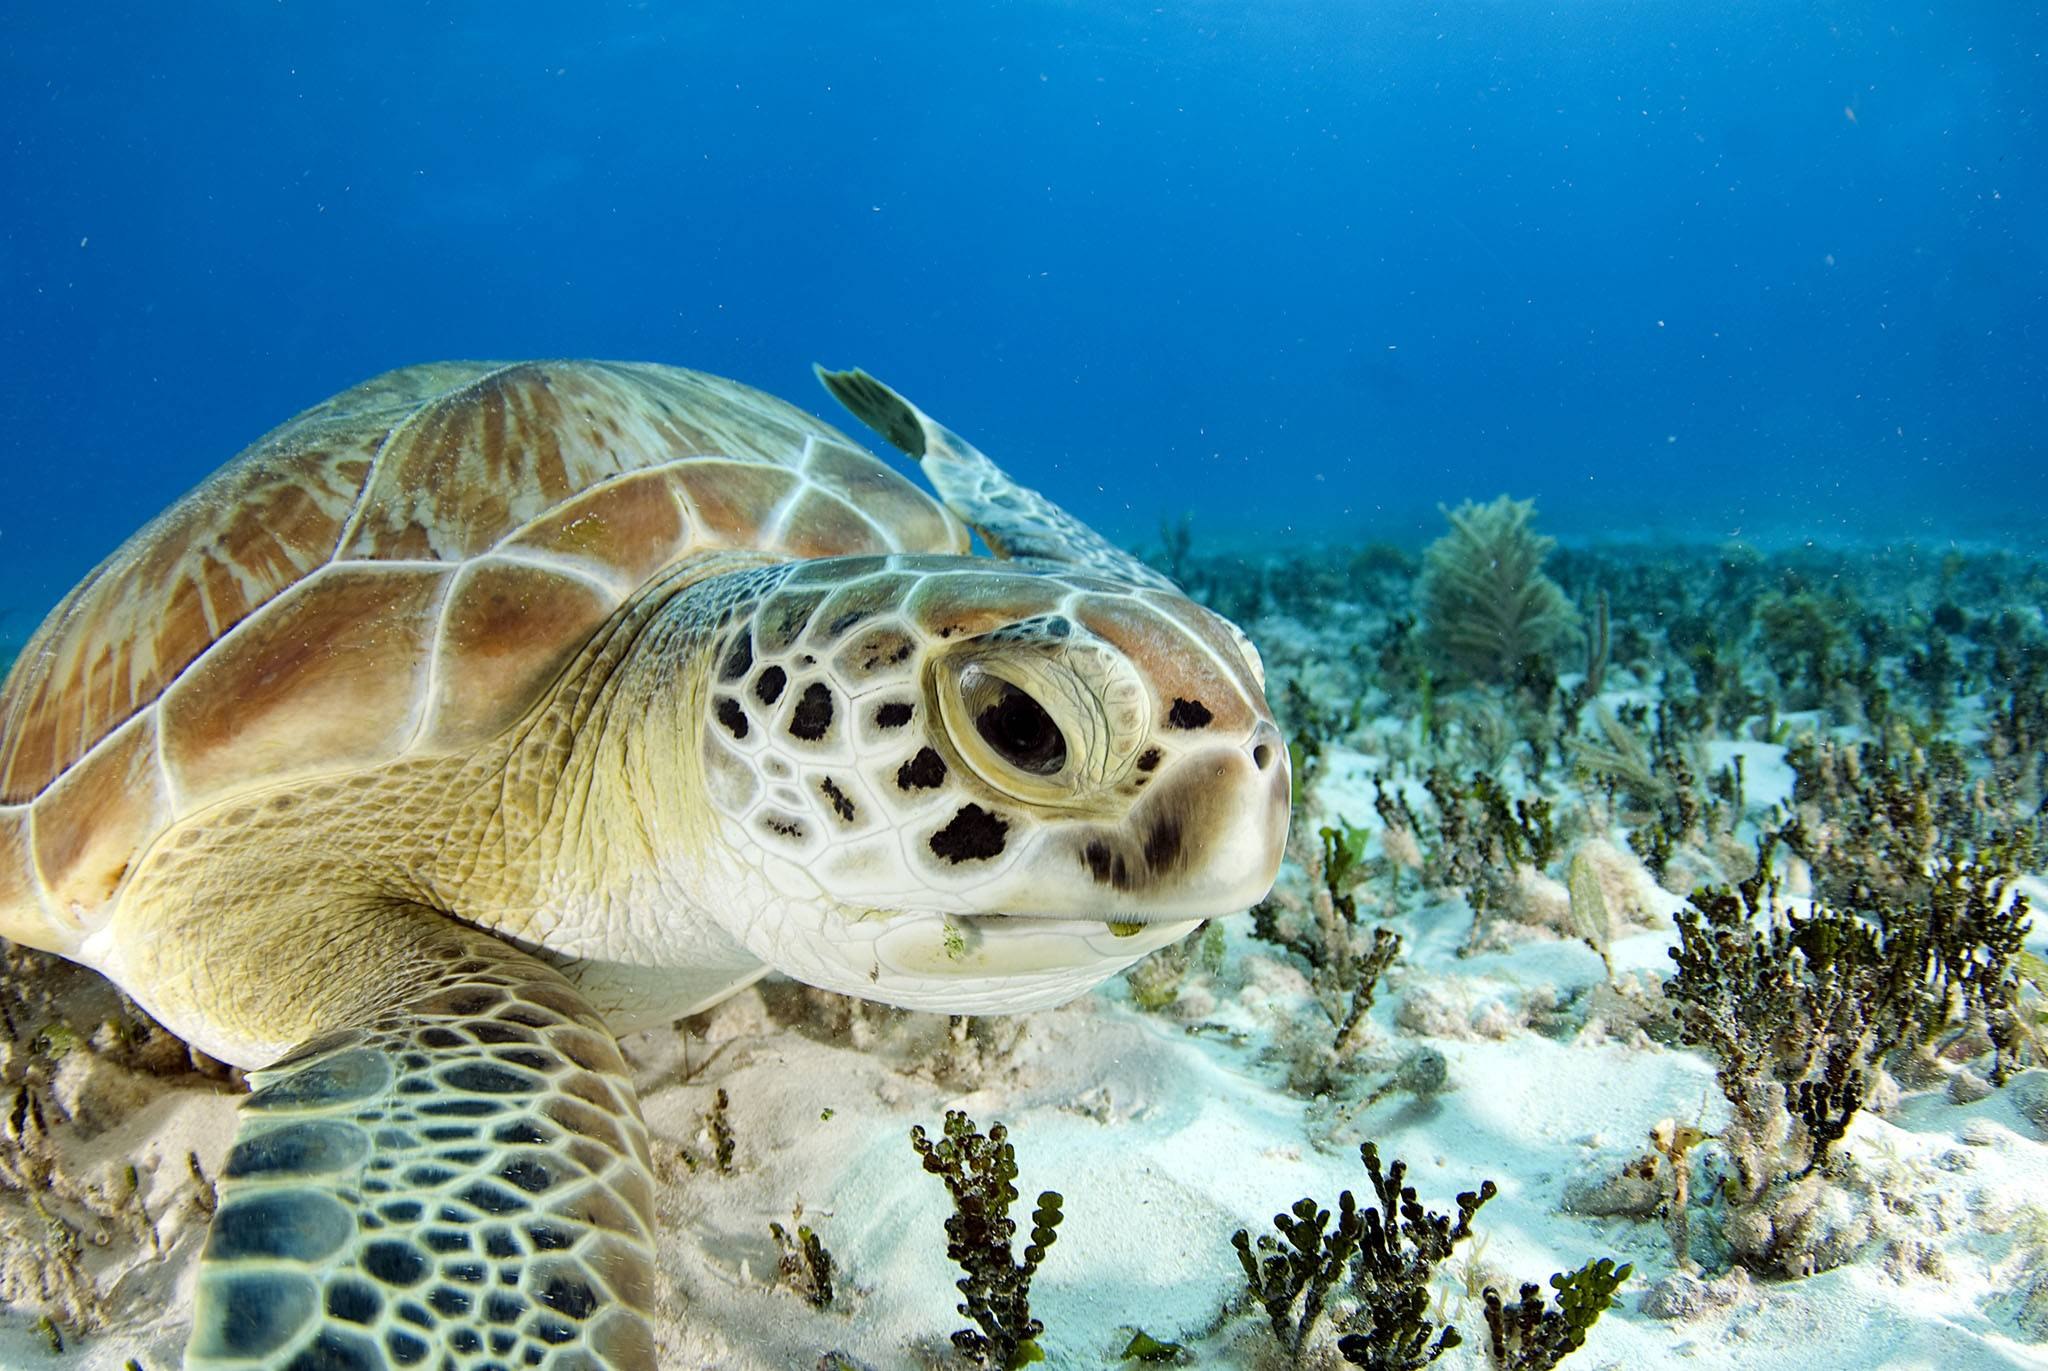 Морские обитатели морская черепаха. Черепаха бисса (Каретта). Рифовая морская черепаха. Зеленая морская черепаха ареал. Морская черепаха и Черепашата.